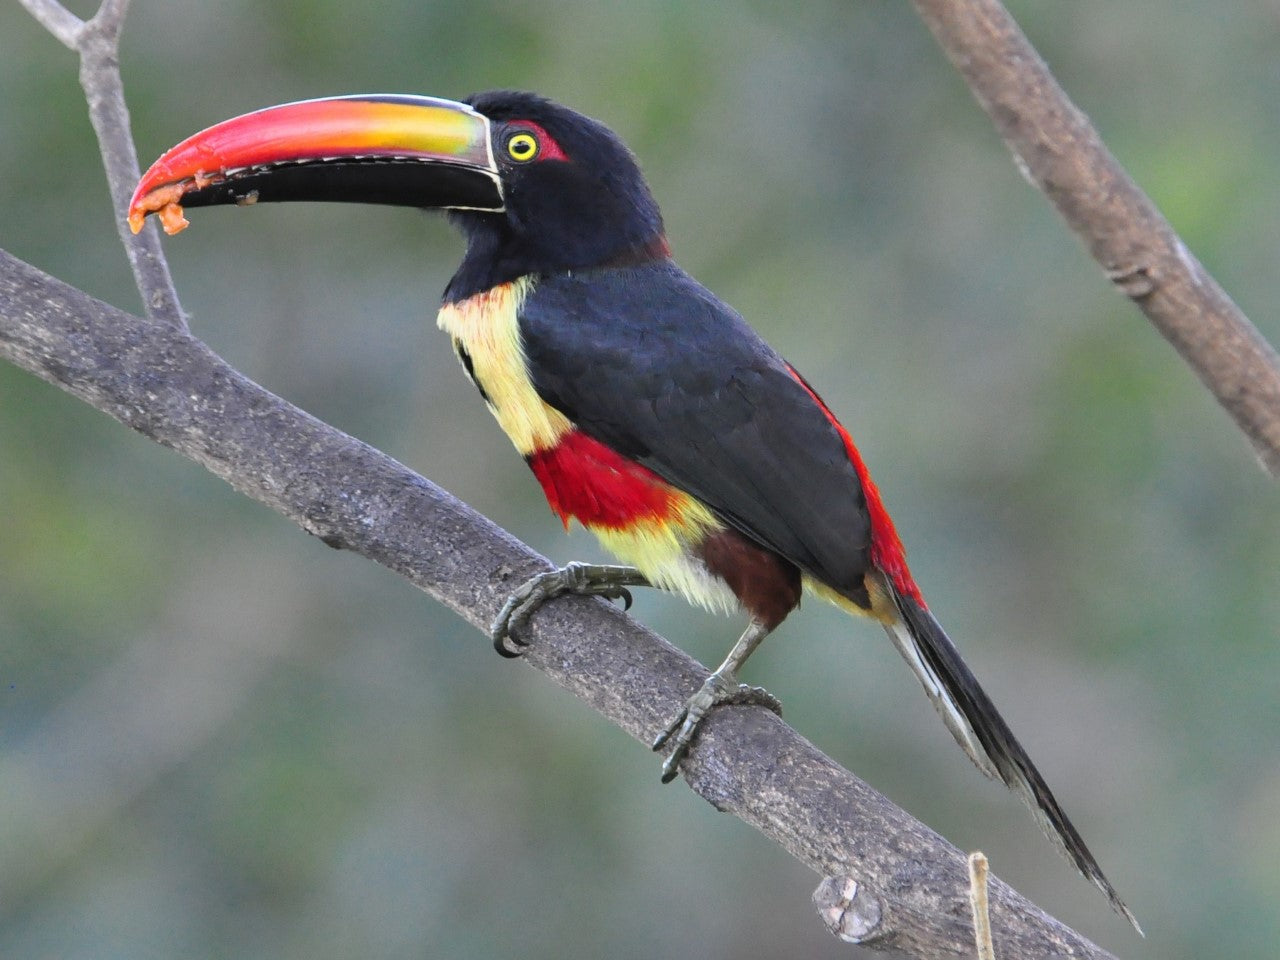 Wild Aracari toucan sitting in a tree eating a coffee cherry